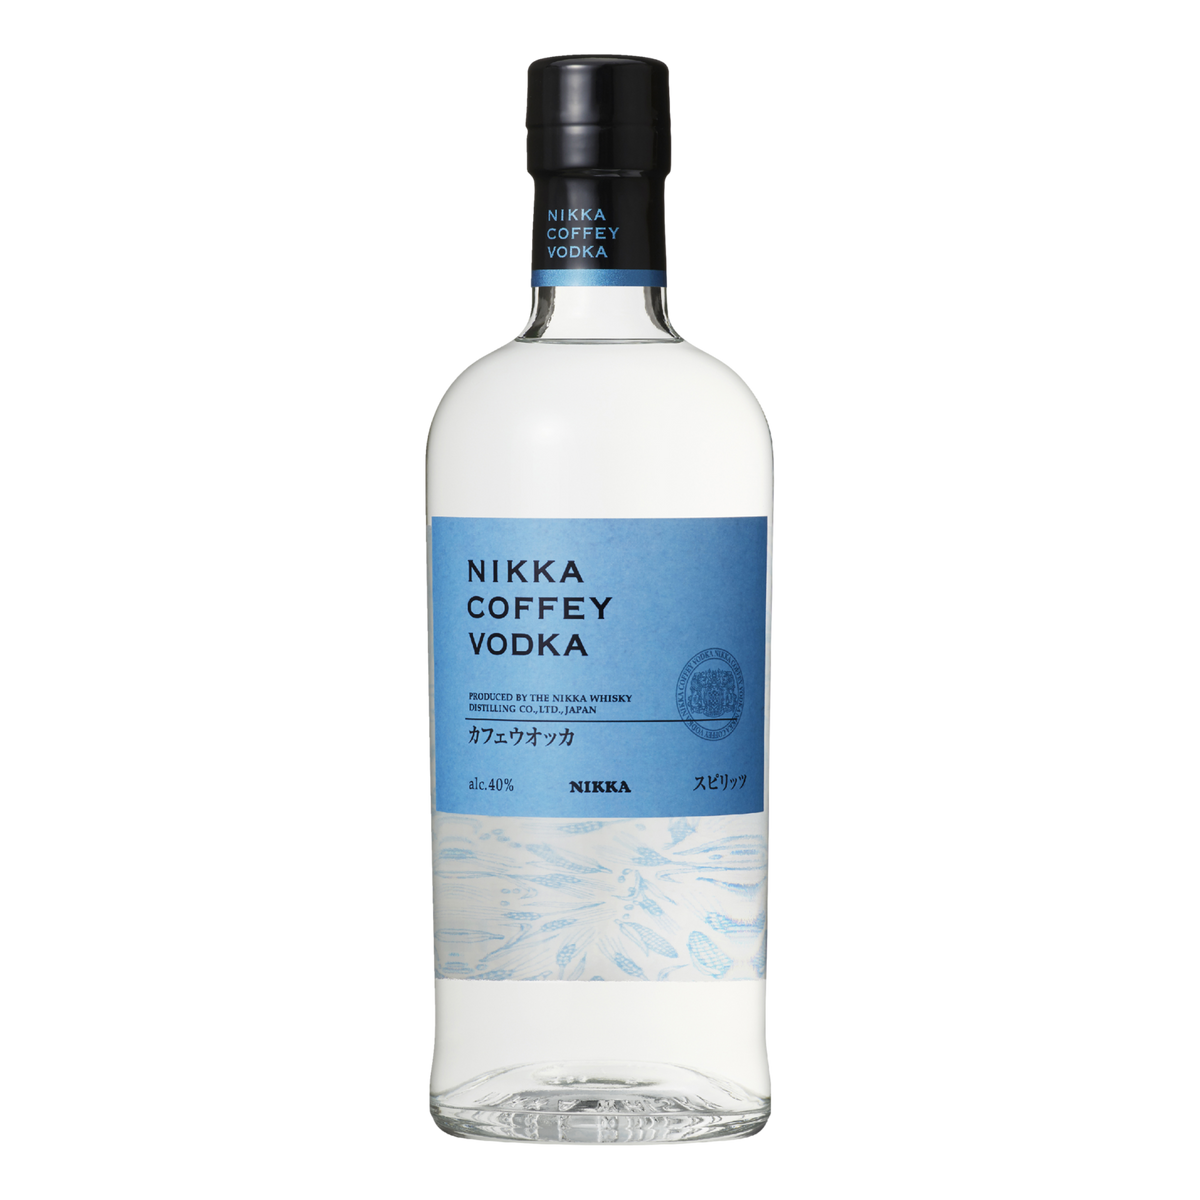 Nikka Coffey Japanese Vodka 700ml - Camperdown Cellars